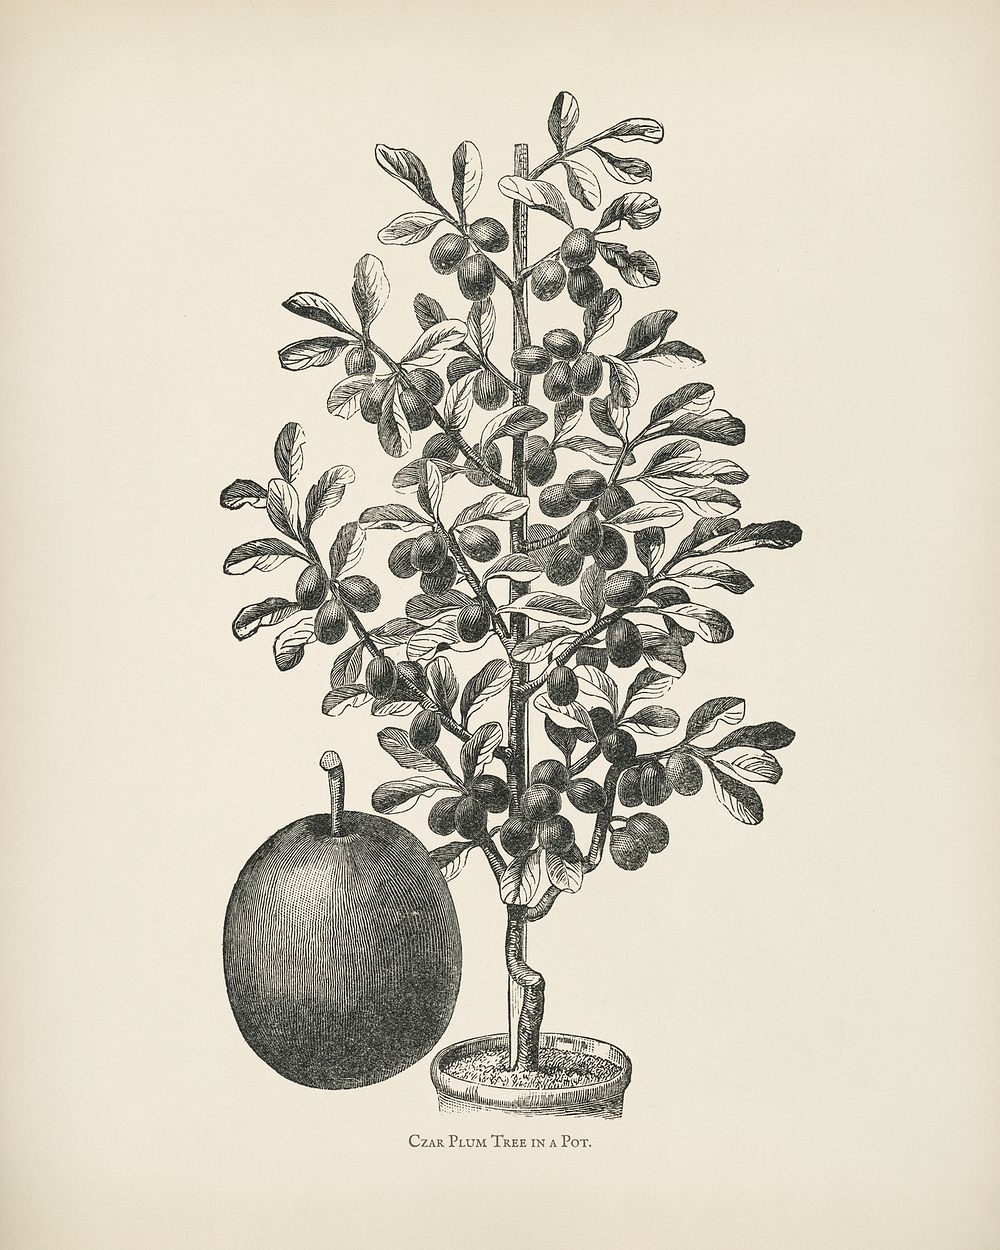 The fruit grower's guide : Vintage illustration of czar plum